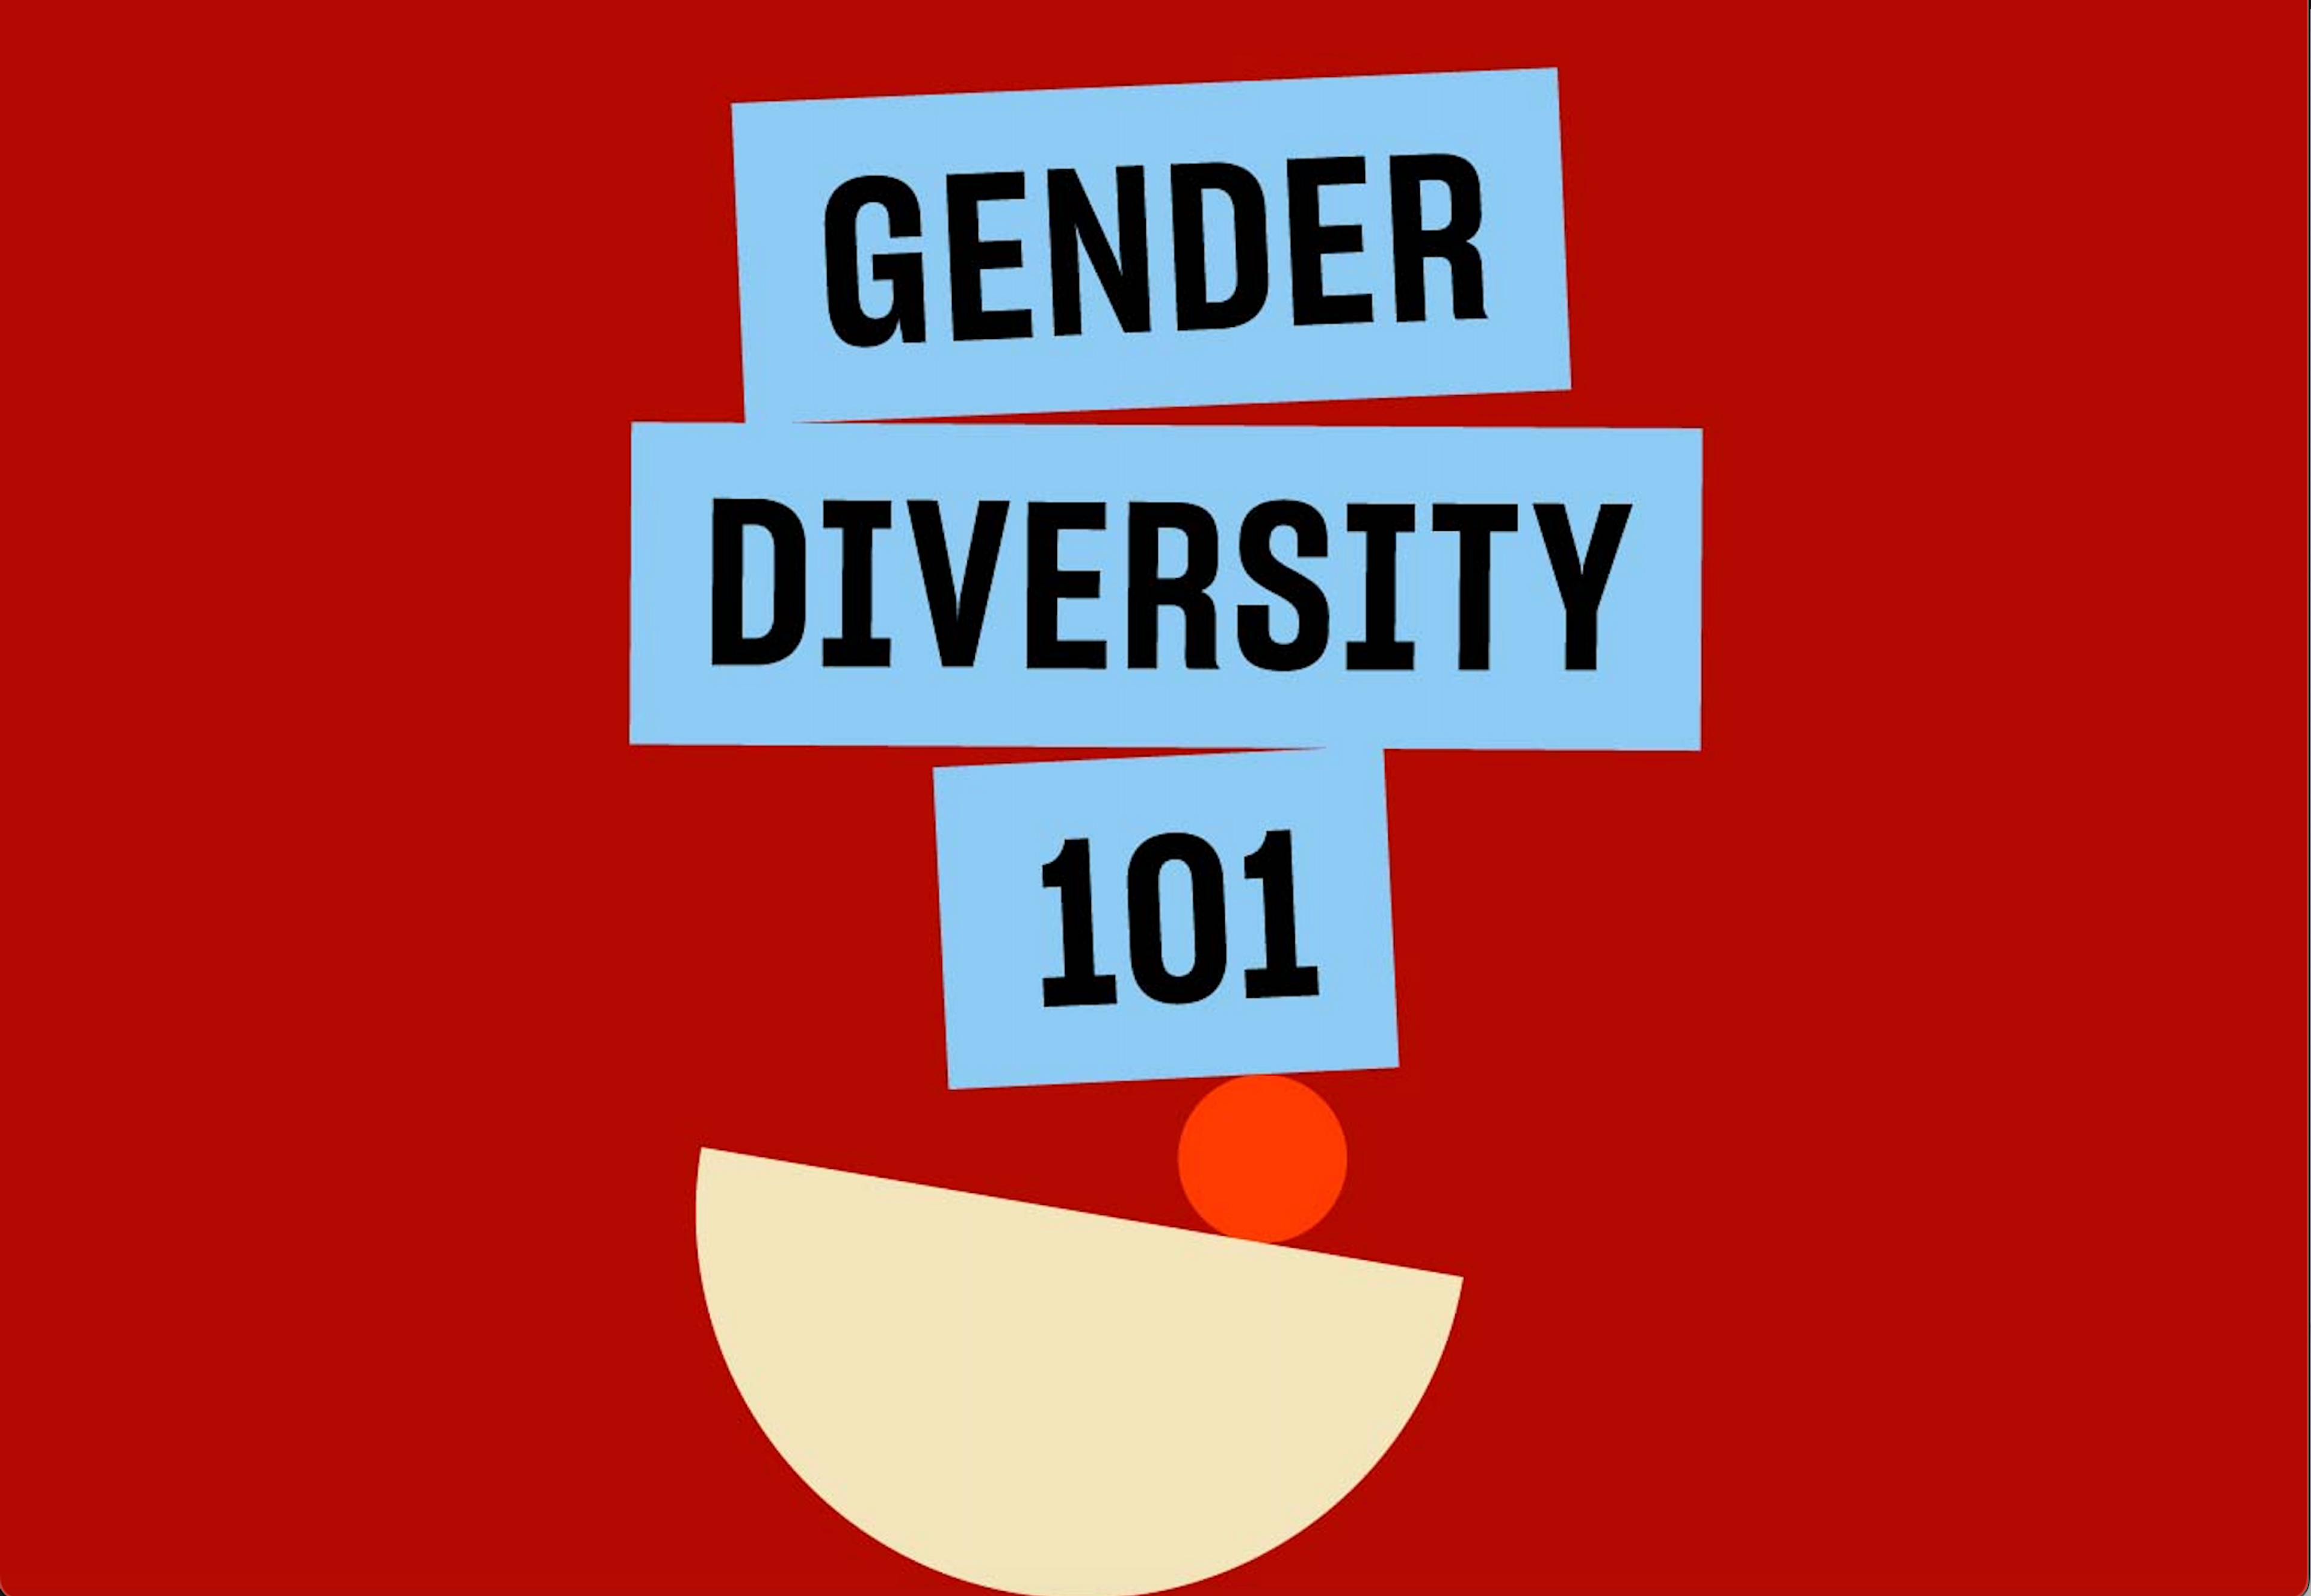 Gender diversity 101